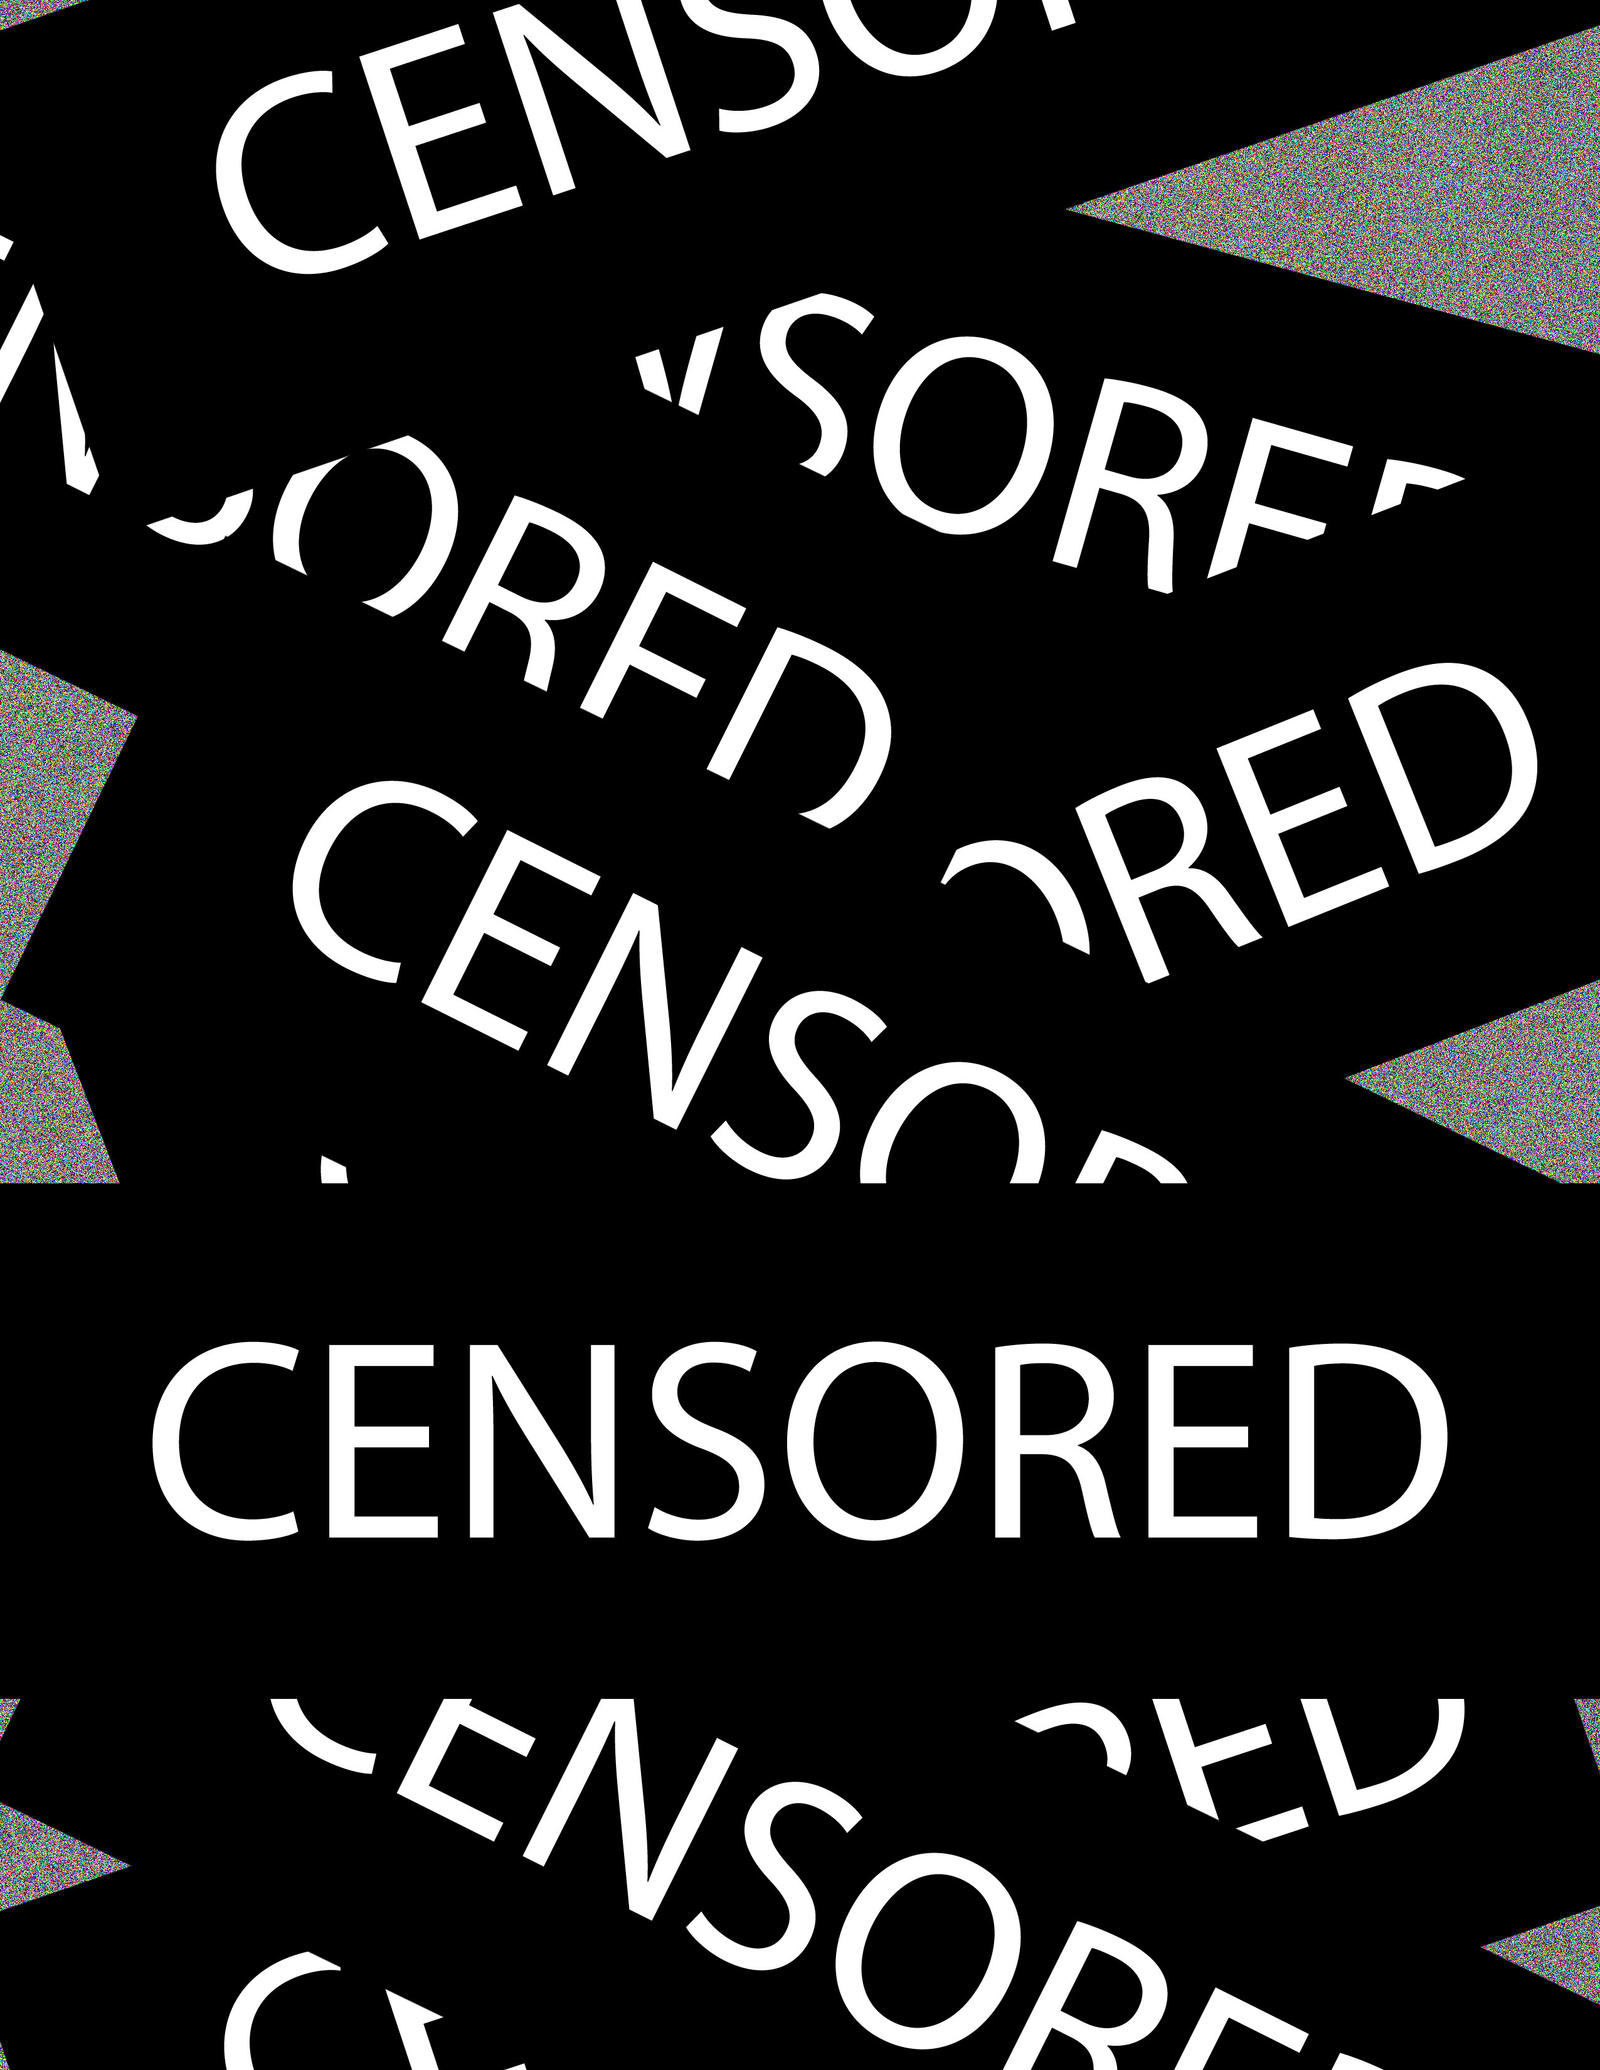 Bangladesh: Stop Promoting Self-Censorship